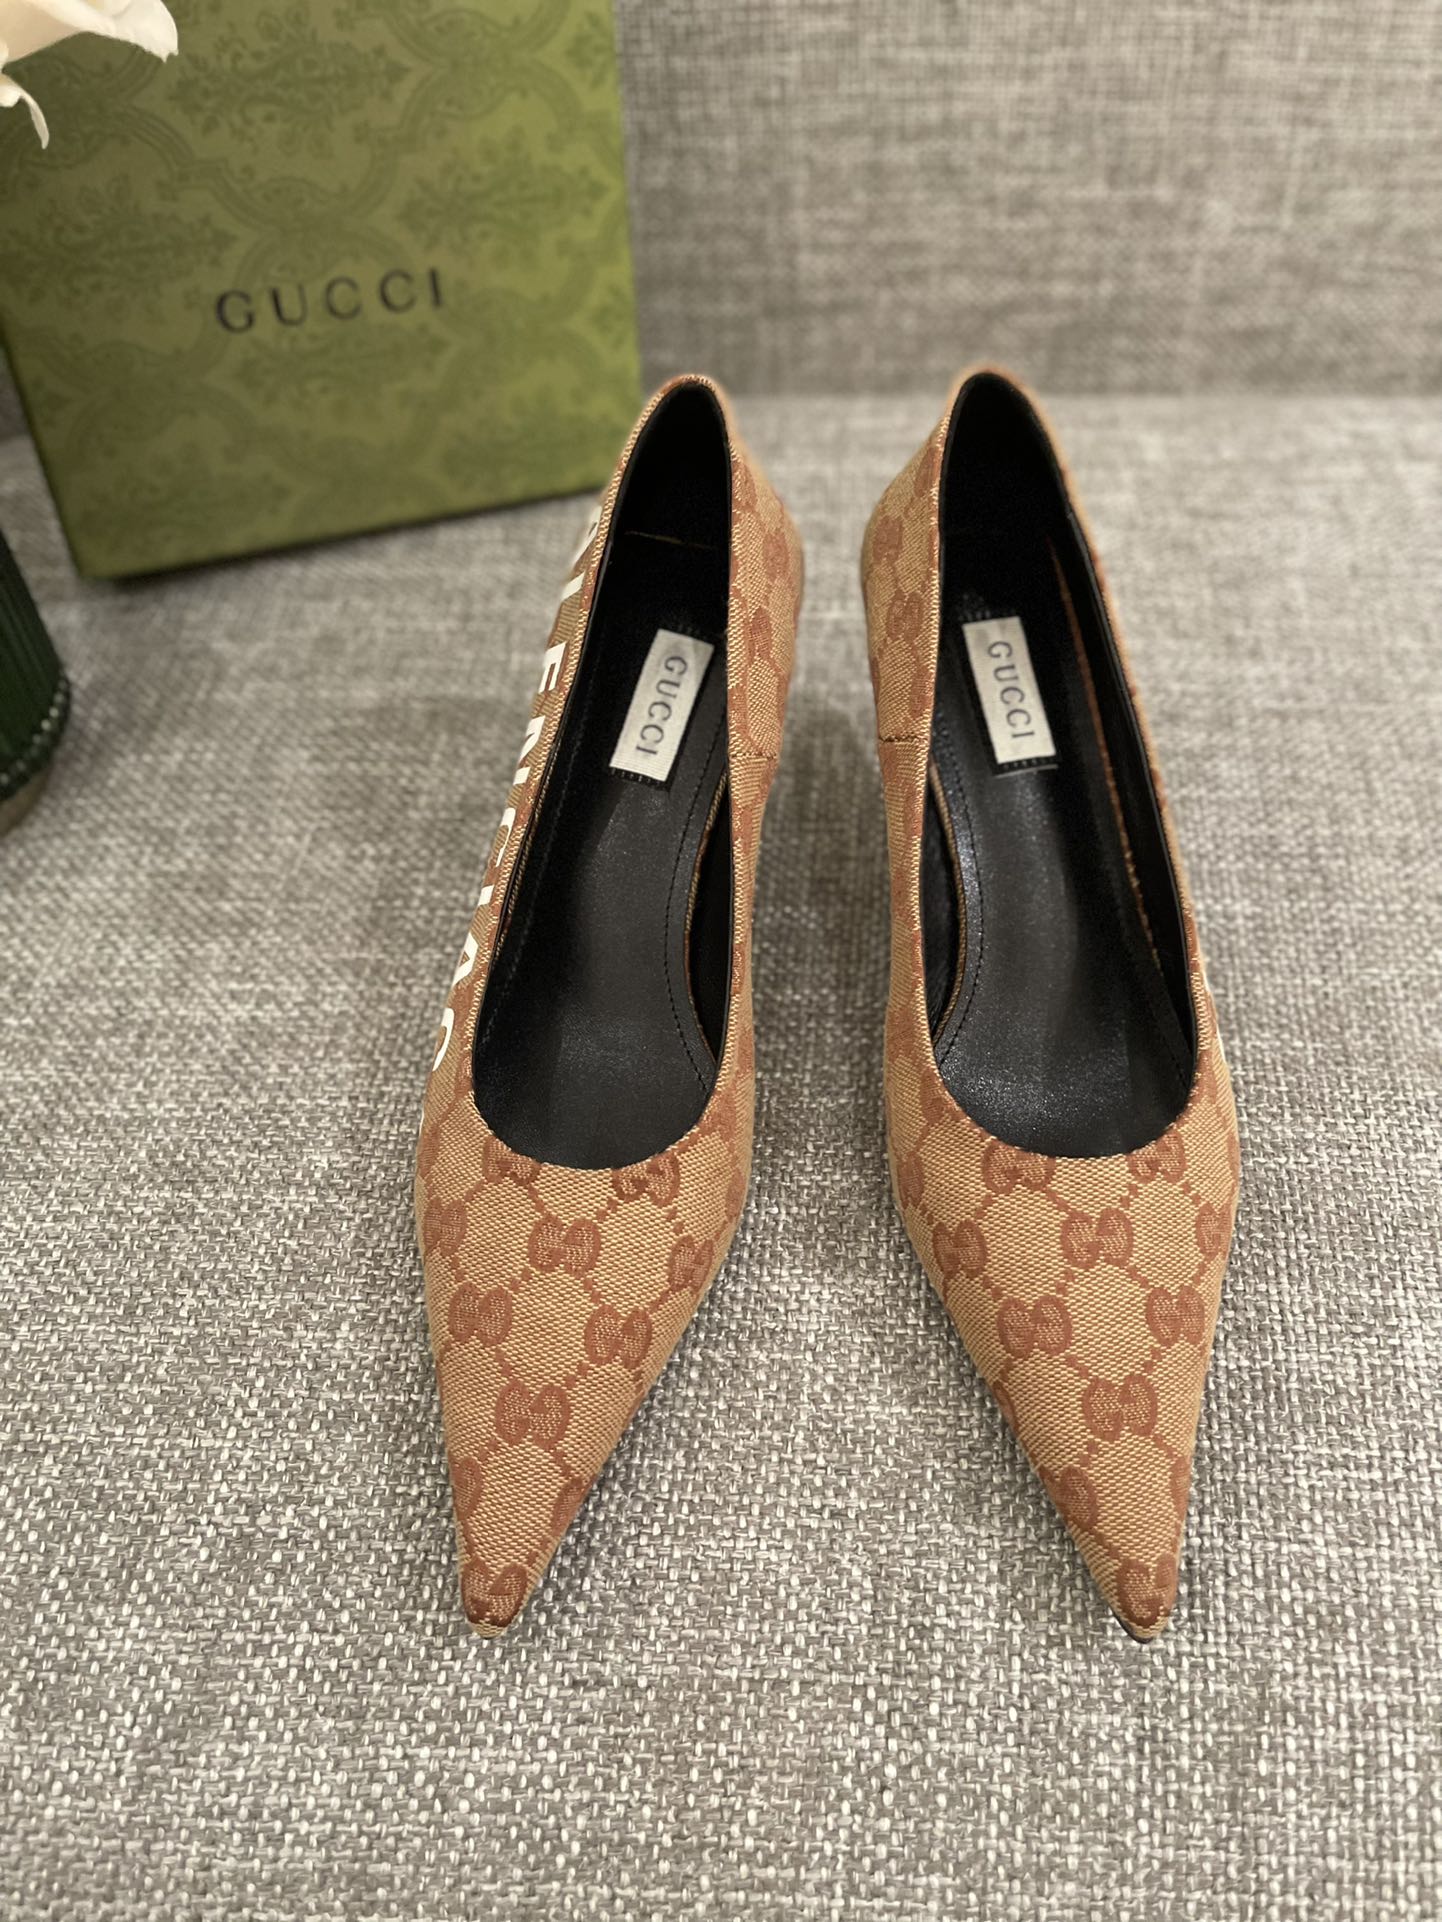 Balenciaga  Gucci High Heels  Fast Leather Design